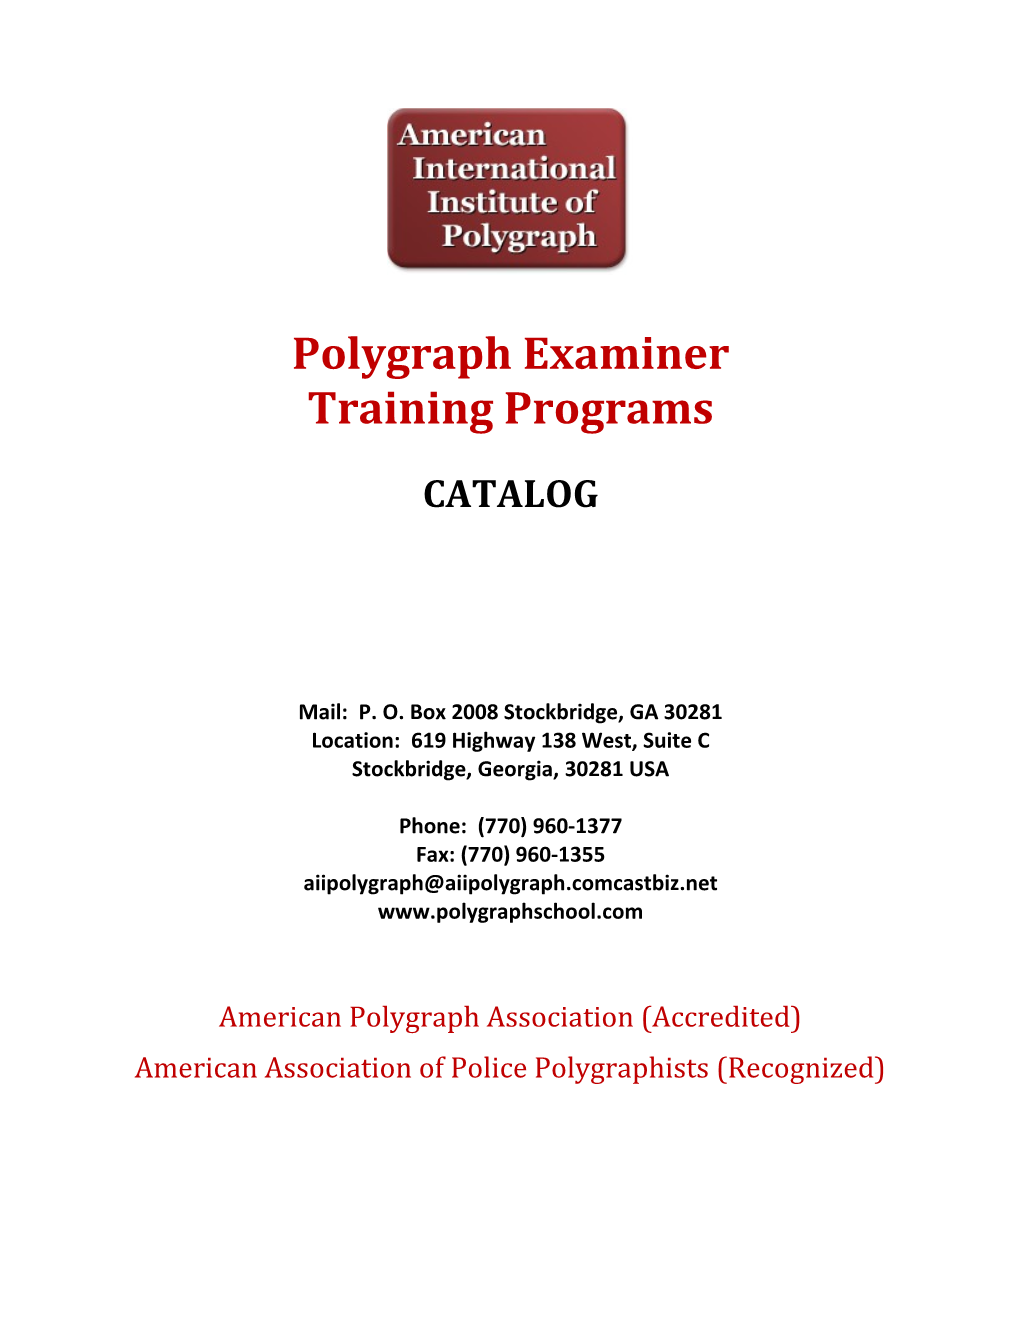 American International Institute of Polygraph